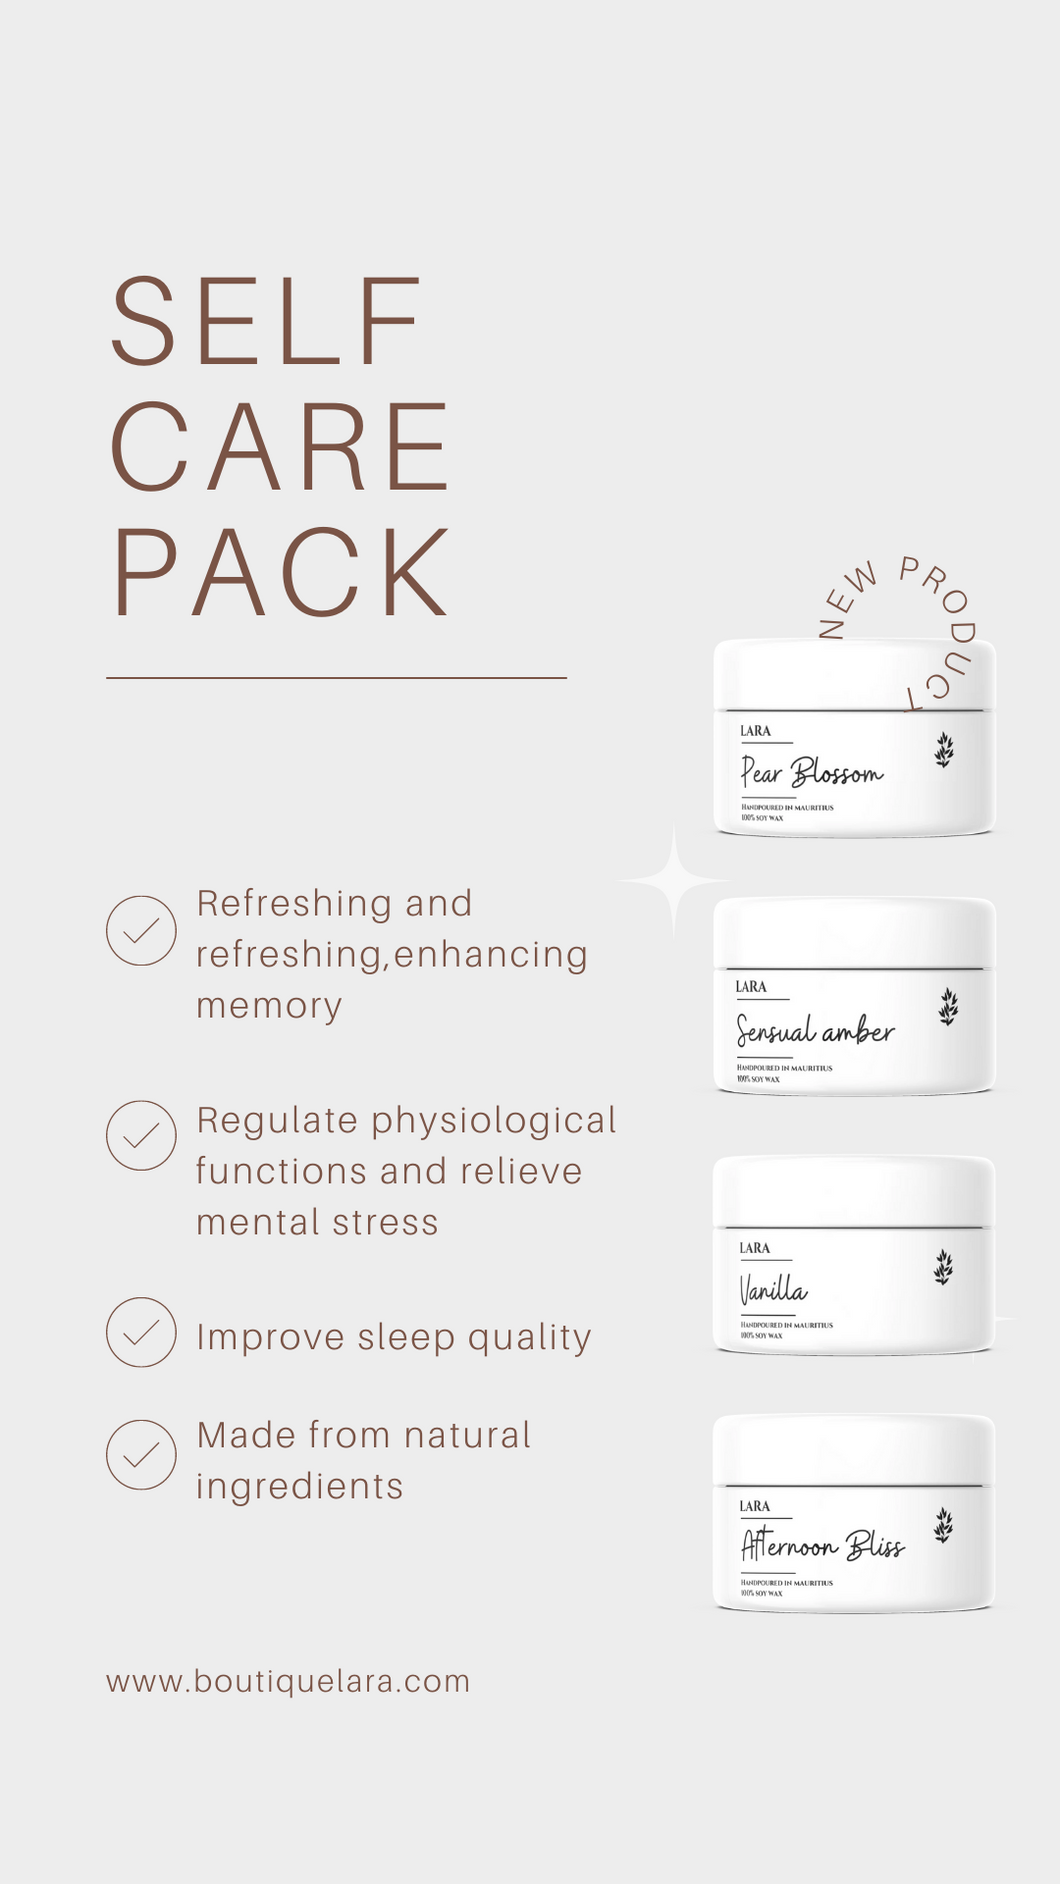 Self care pack